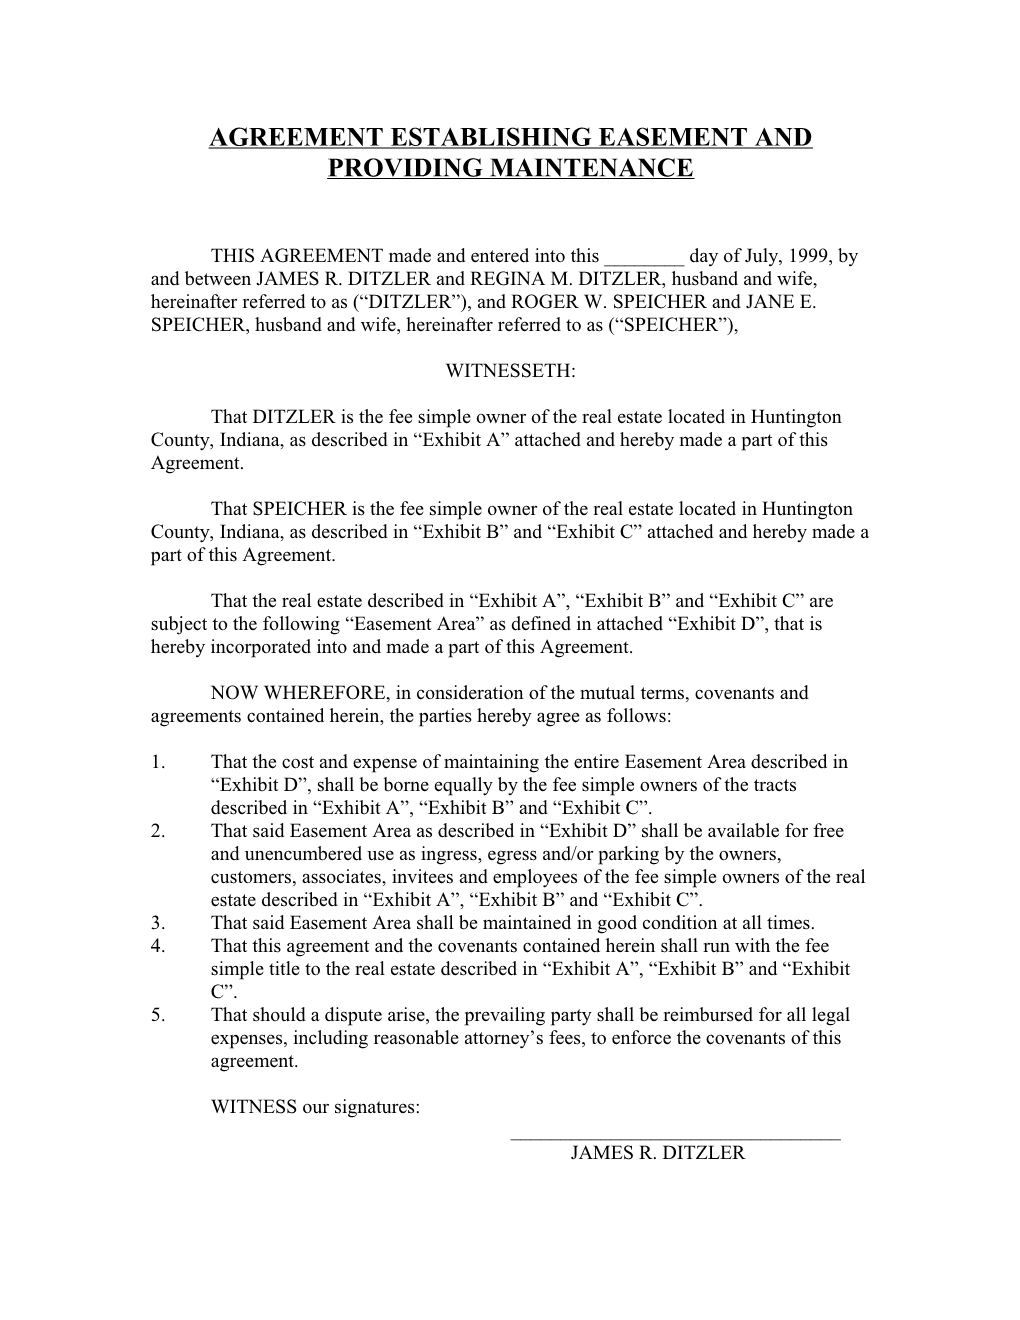 Agreement Establishing Ingress/Egress/Parking Easement and Providing for It S Maintenance